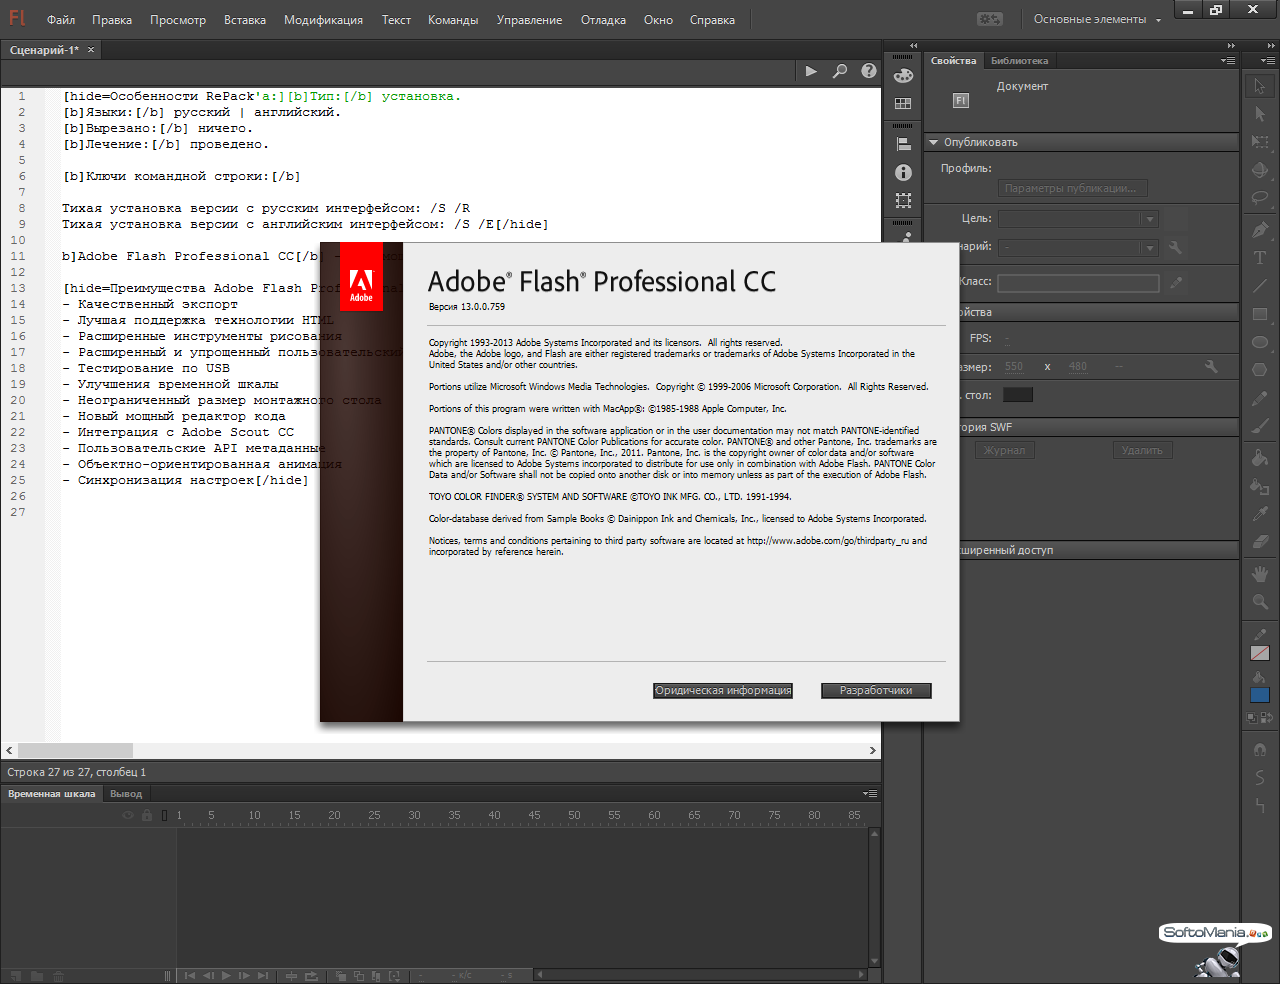 Adobe Flash Professional CC 13.0.0.759